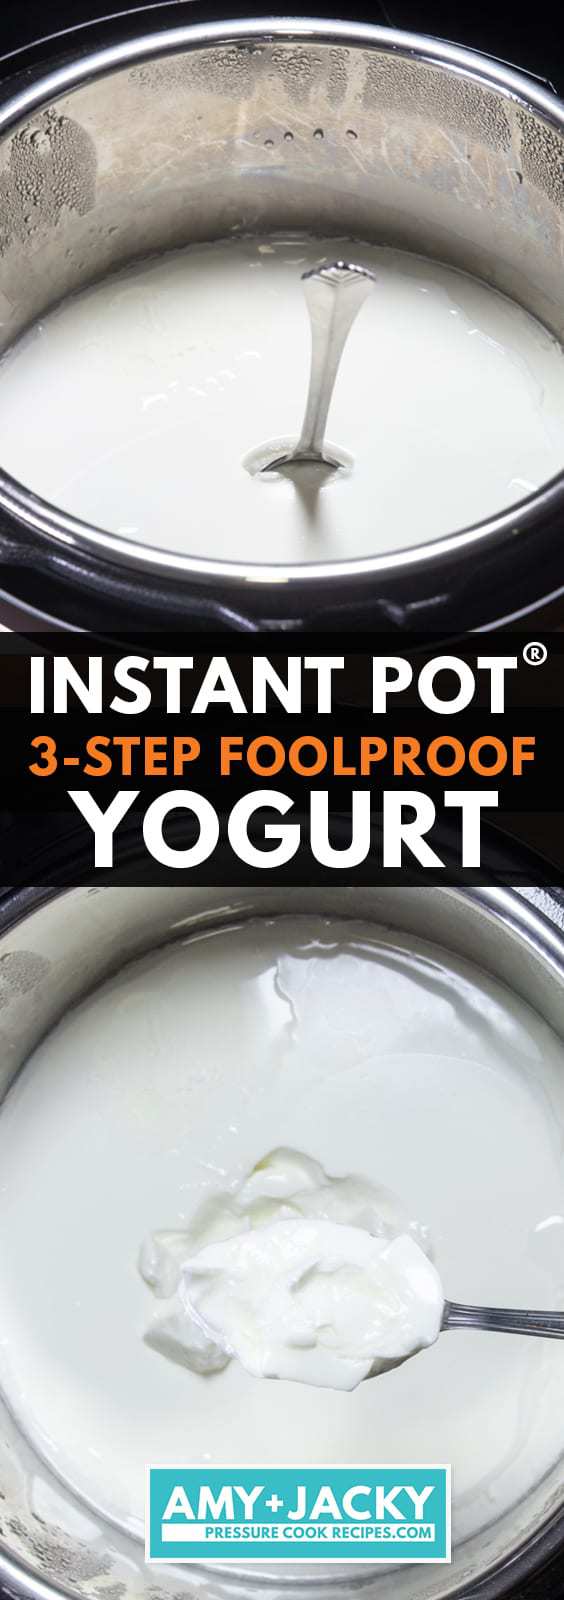 https://www.pressurecookrecipes.com/wp-content/uploads/2018/12/instant-pot-yogurt-3.jpg